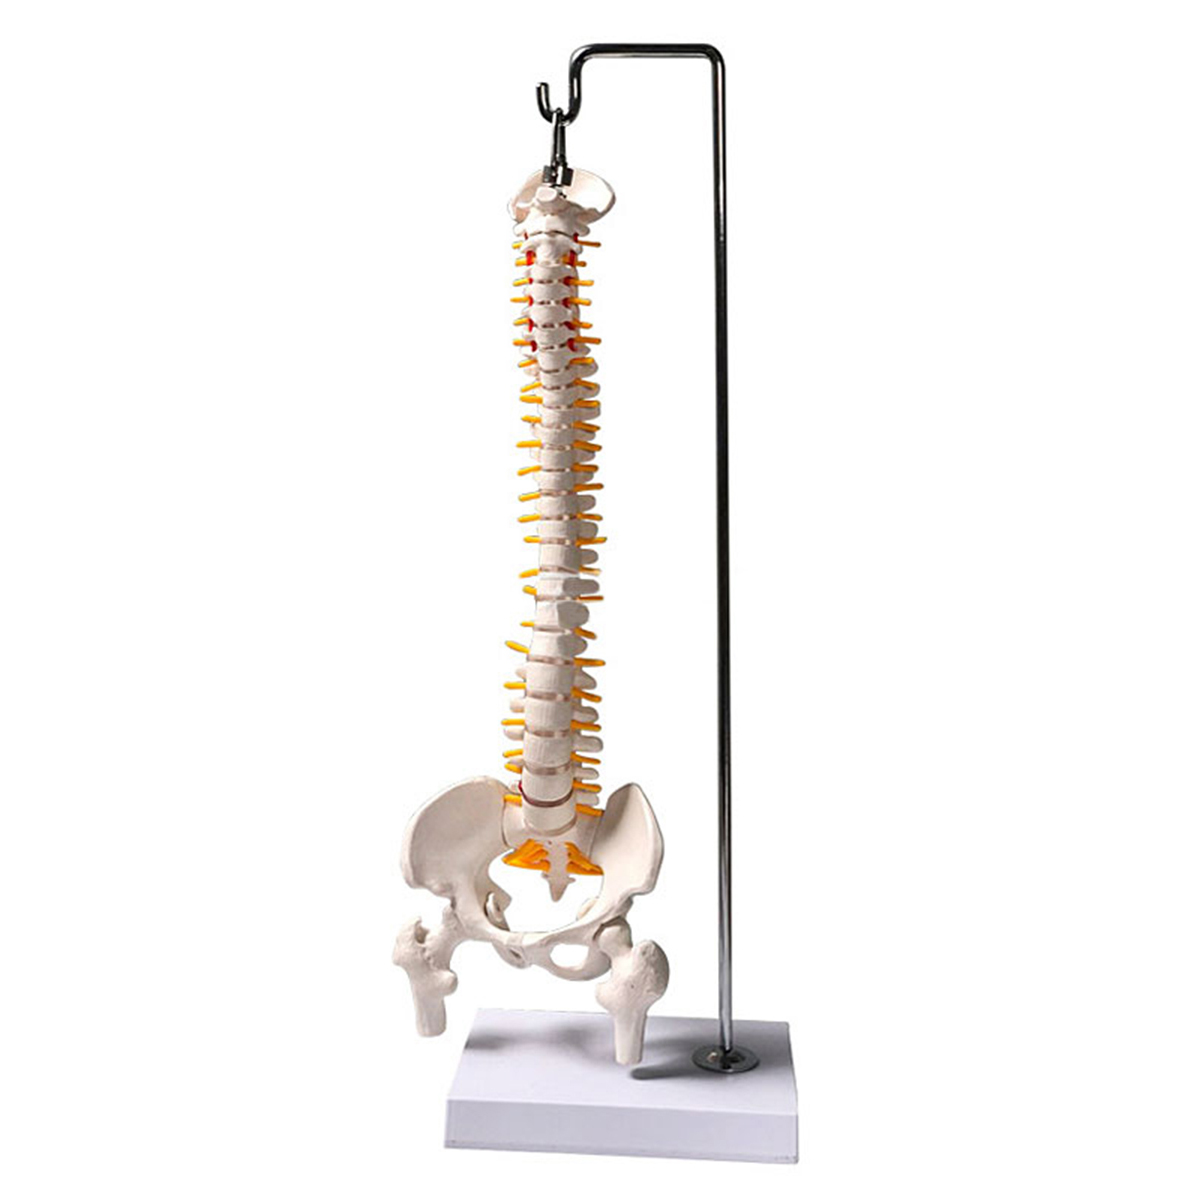 45cm-177quot-Spine-Medical-Model-With-Pelvis-Femur-Heads-12-Life-Lab-Equipment-1620821-3